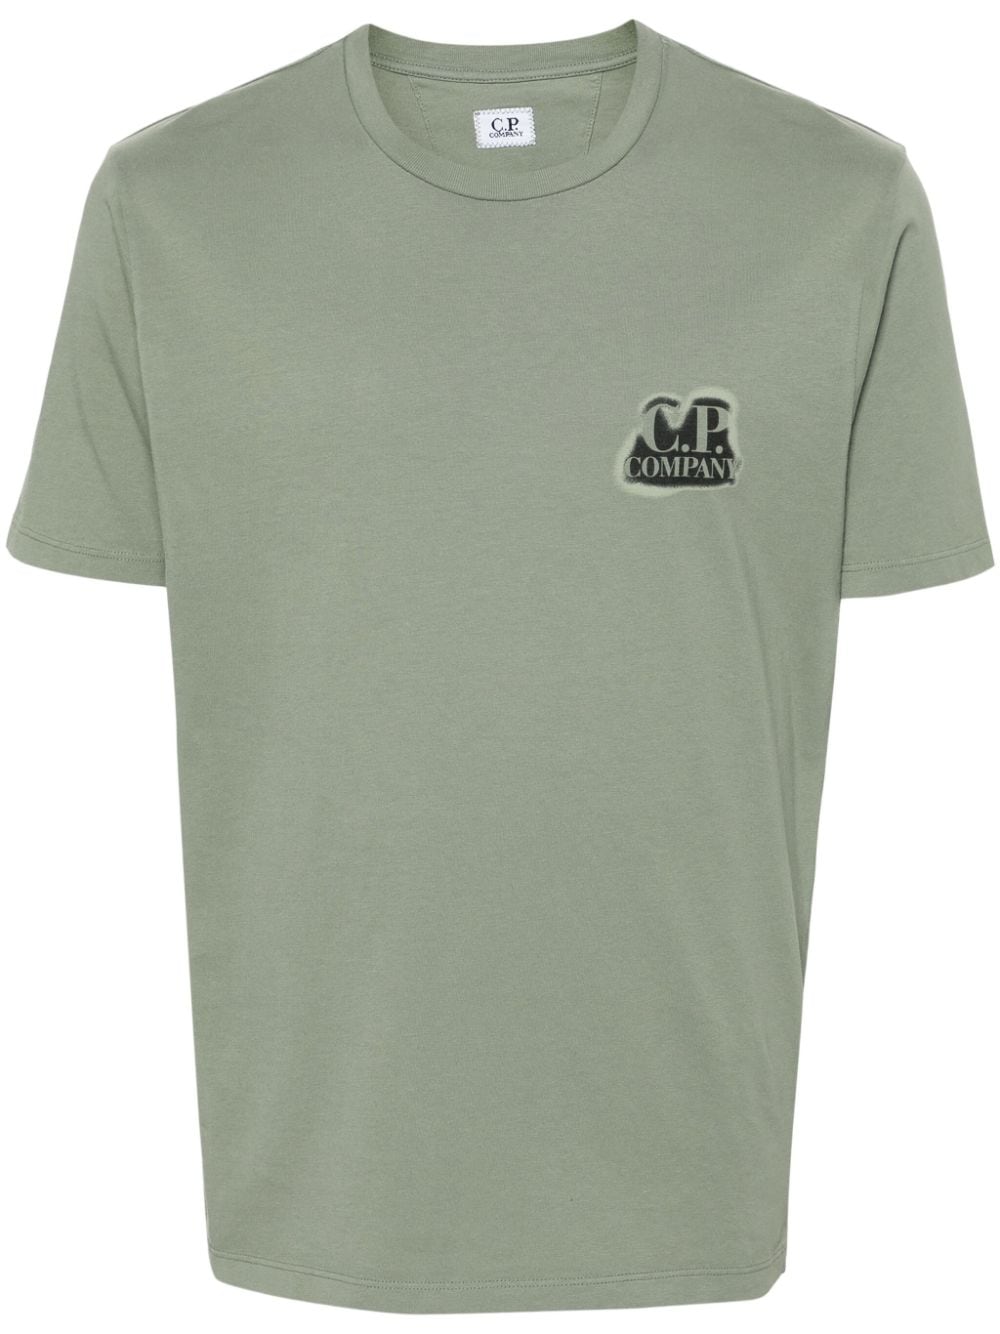 C.P. Company T-Shirt mit British Sailor-Print - Grün von C.P. Company